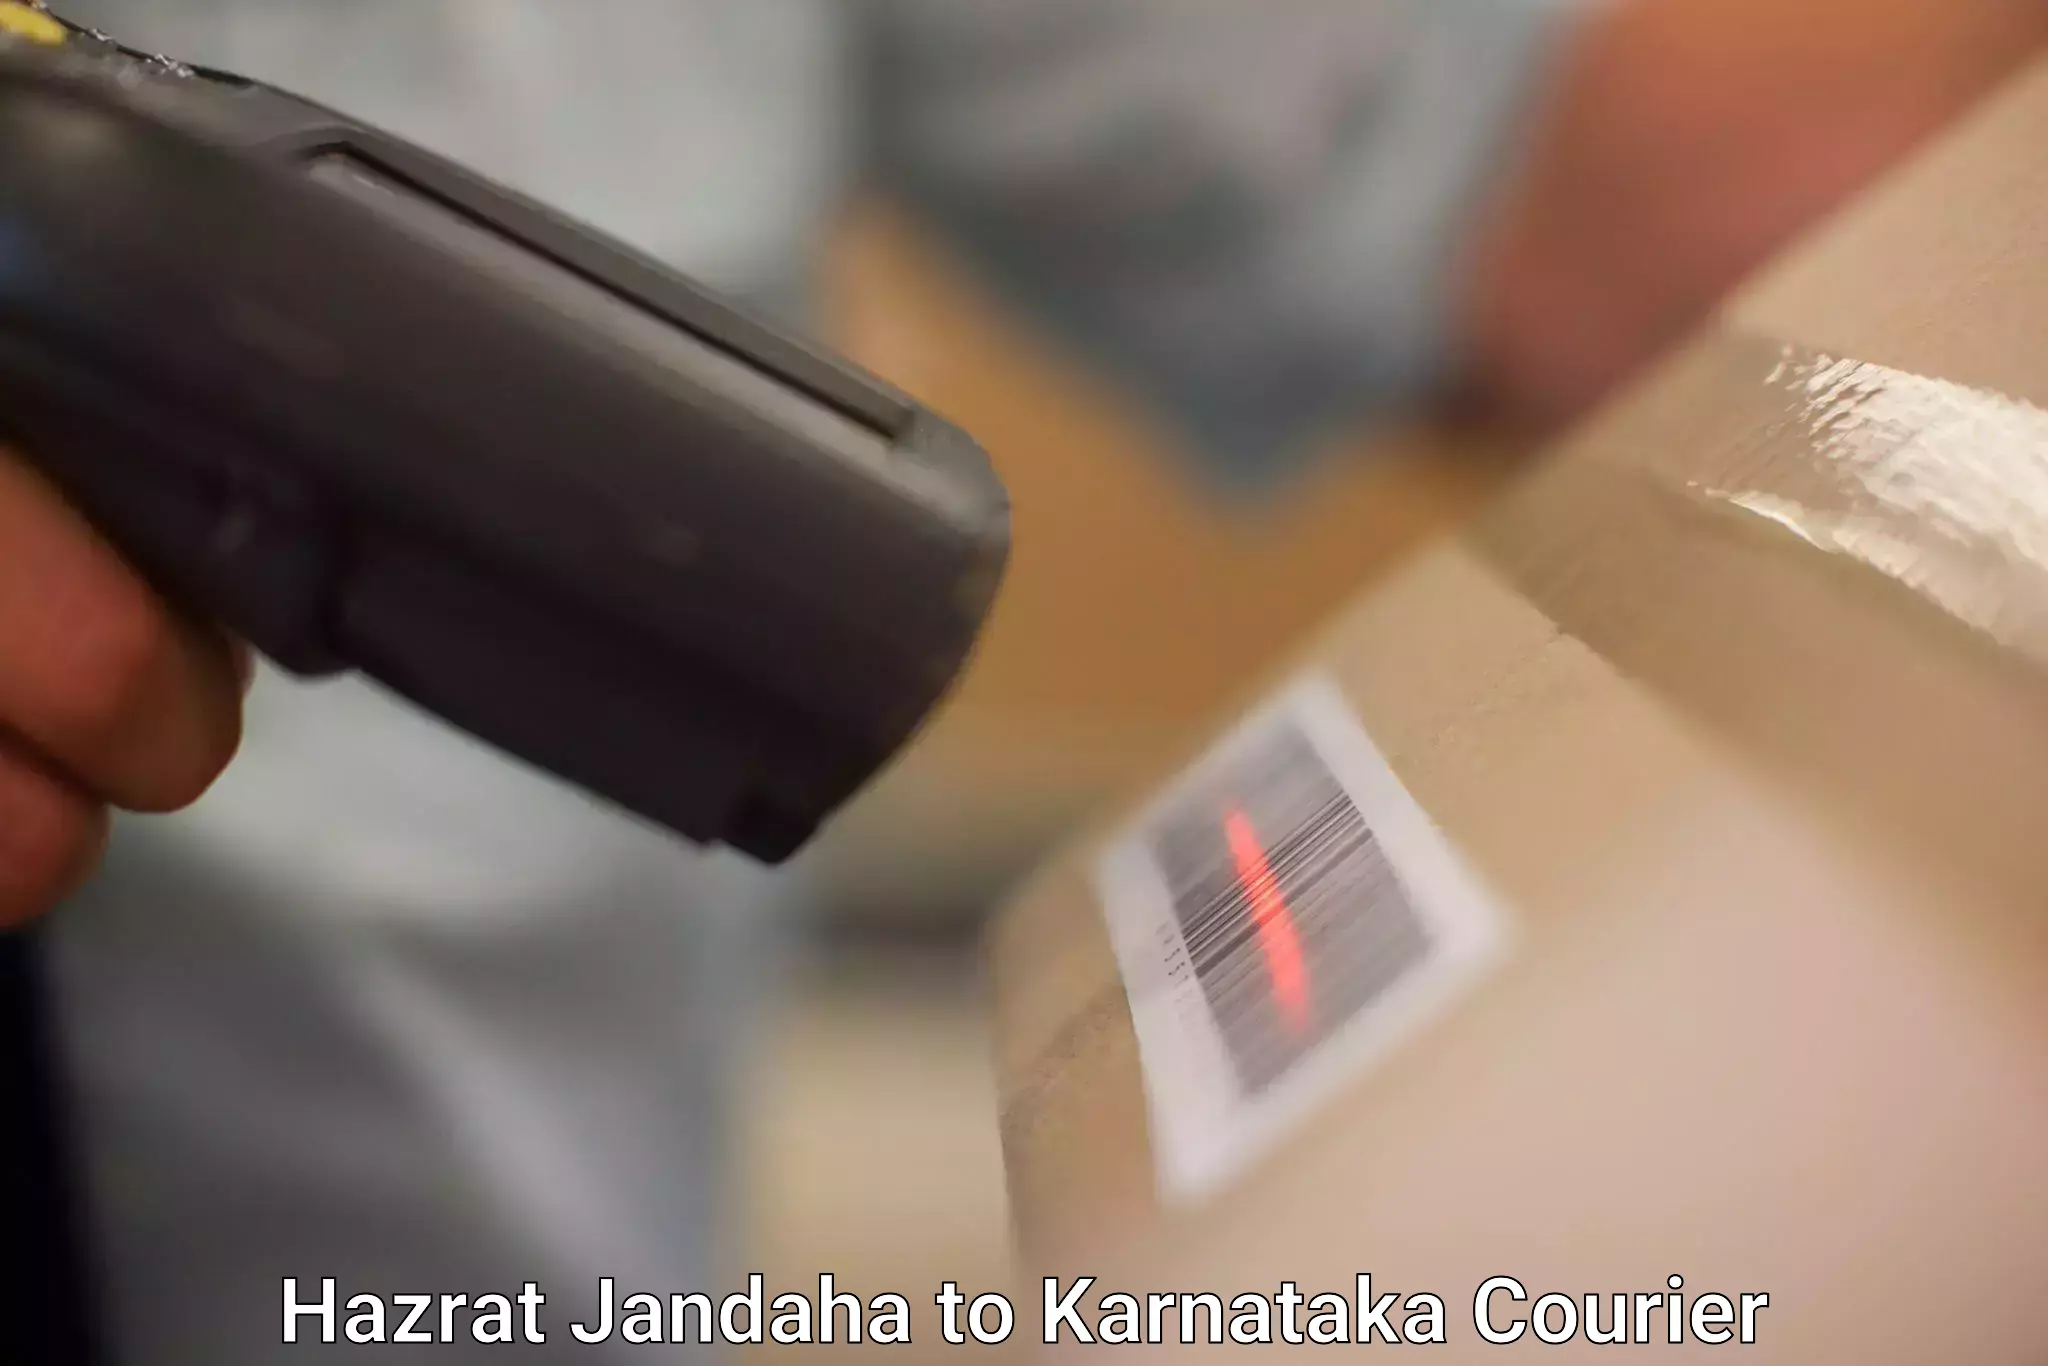 Courier service efficiency Hazrat Jandaha to Karnataka